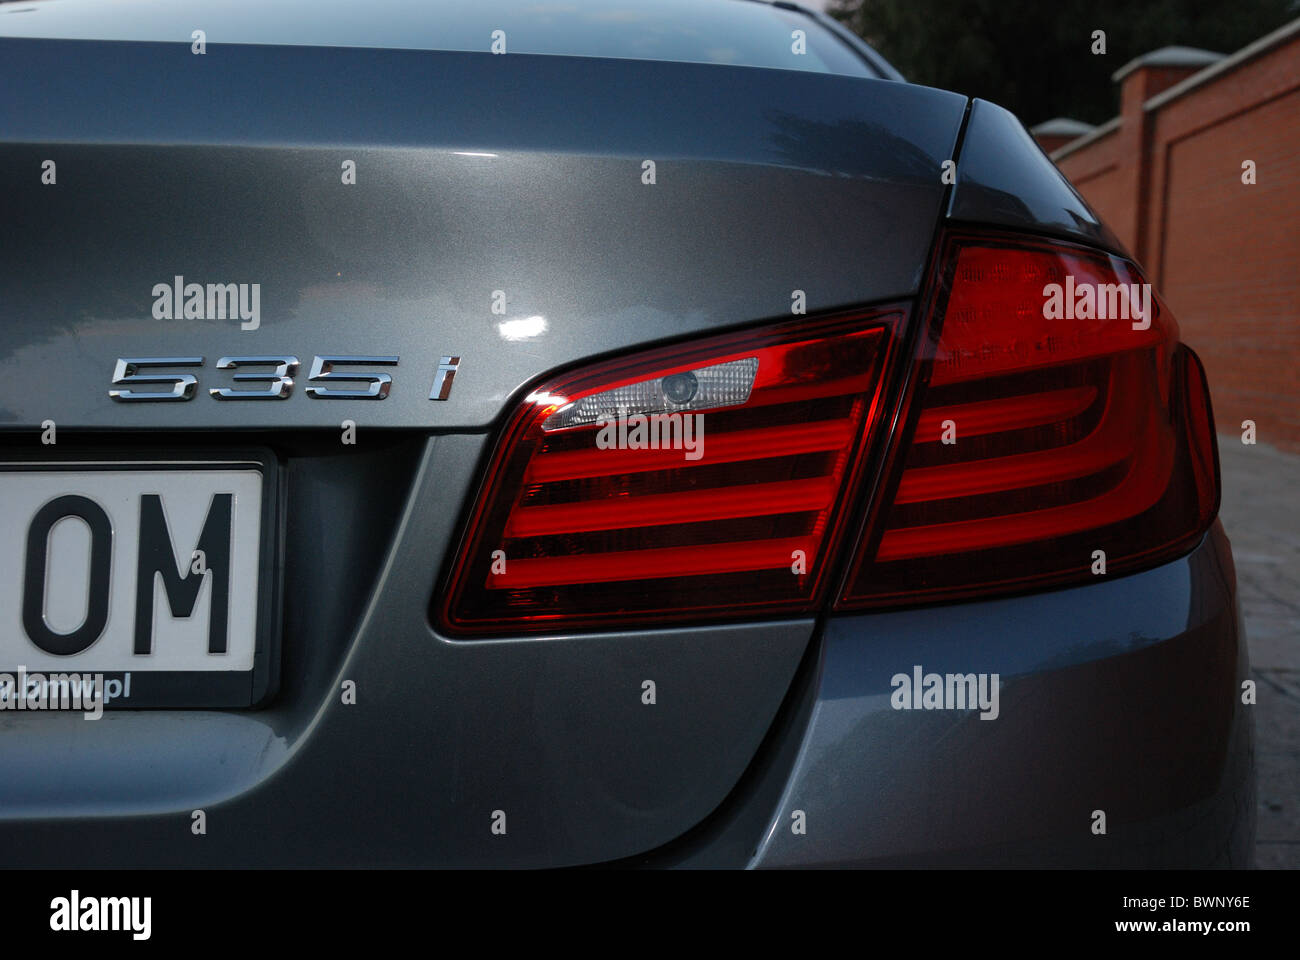 BMW 535i - mein 2010 - grau Metallic - vier Türen (4D) - Premium-deutschen höheren Klasse Limousine, Segment (Segment Executive) E - boot Stockfoto